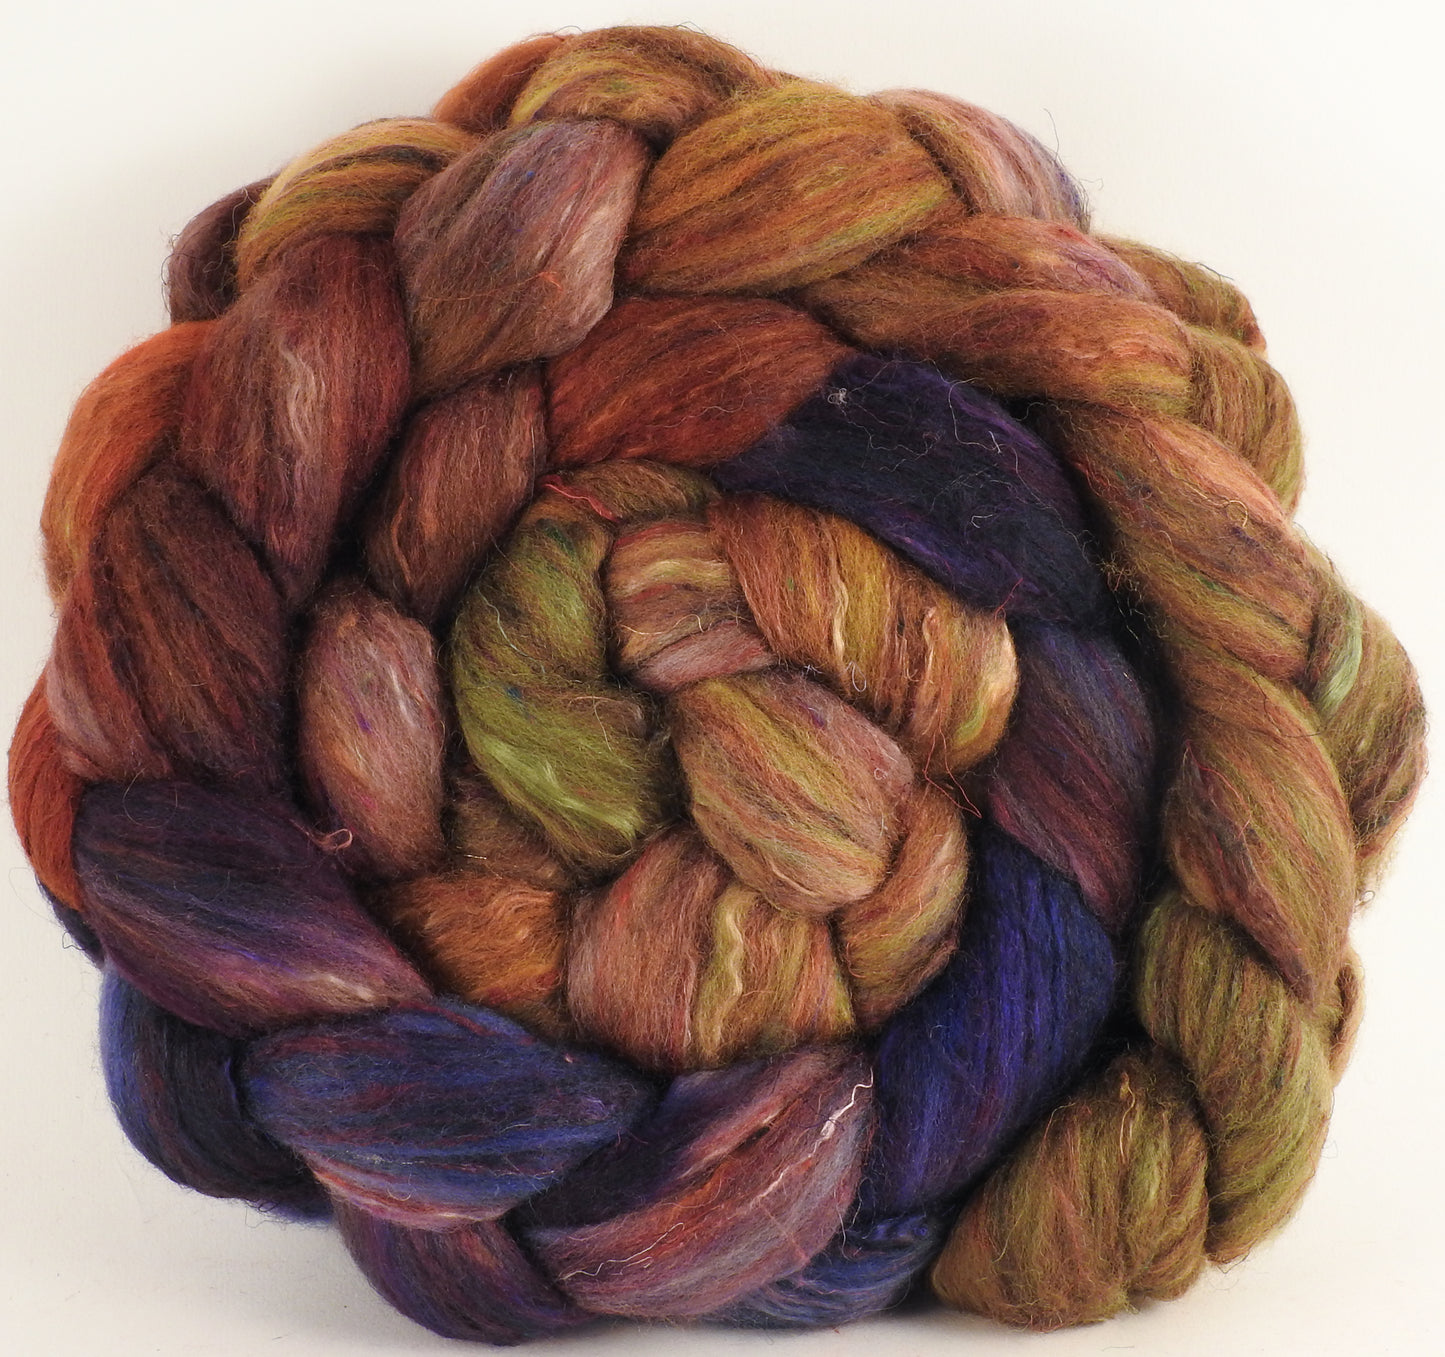 Batt in a Braid #39 - Toulouse - Falkland Merino/ Mulberry Silk / Sari Silk (50/25/25) - Inglenook Fibers